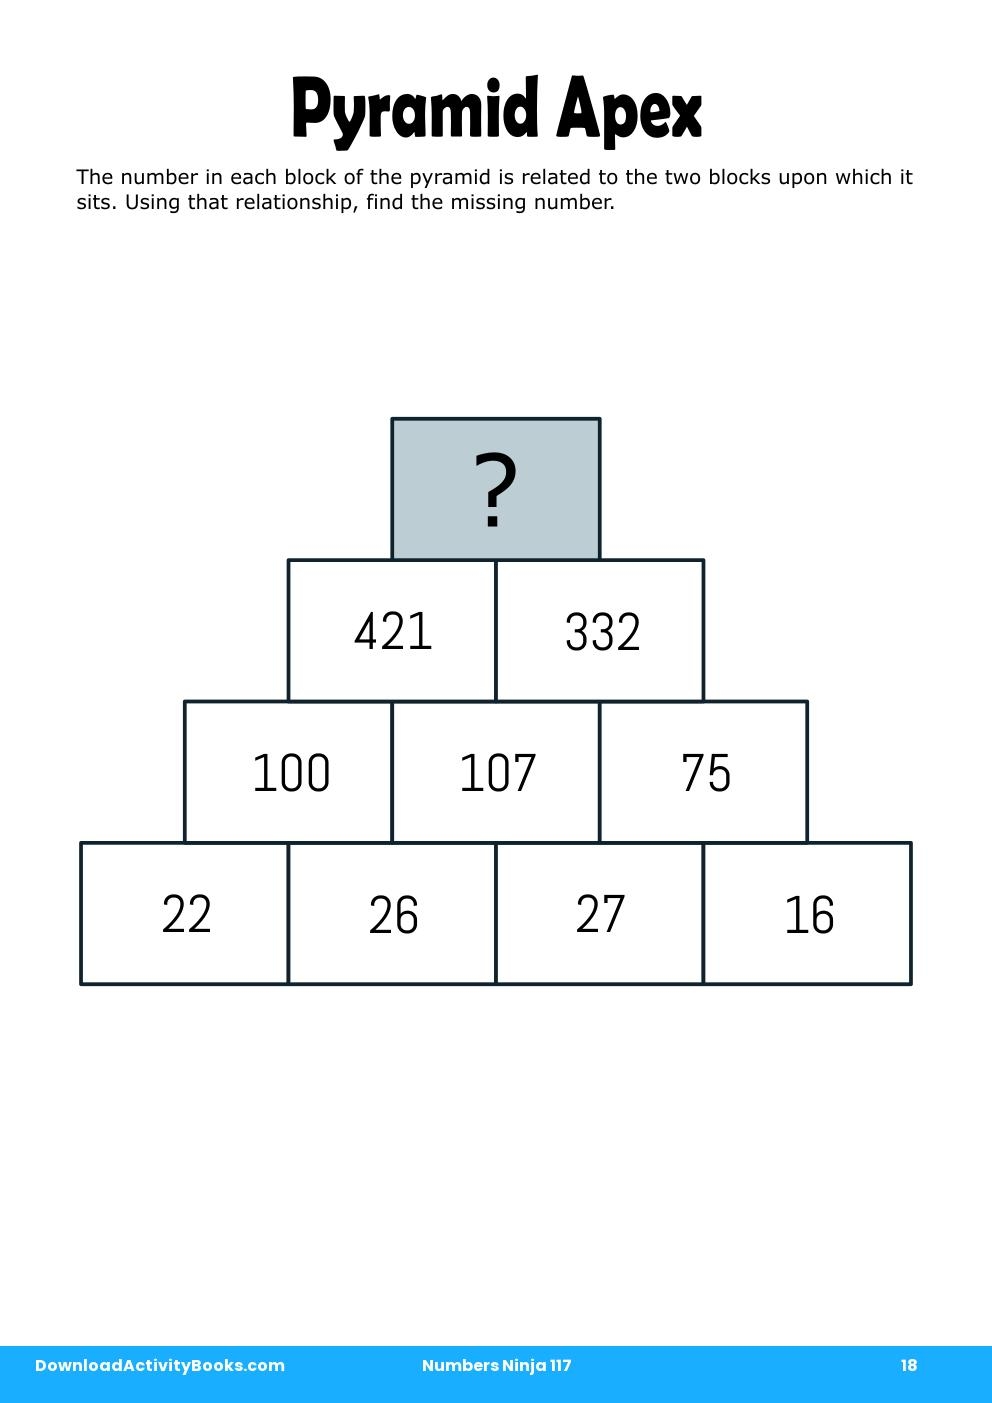 Pyramid Apex in Numbers Ninja 117